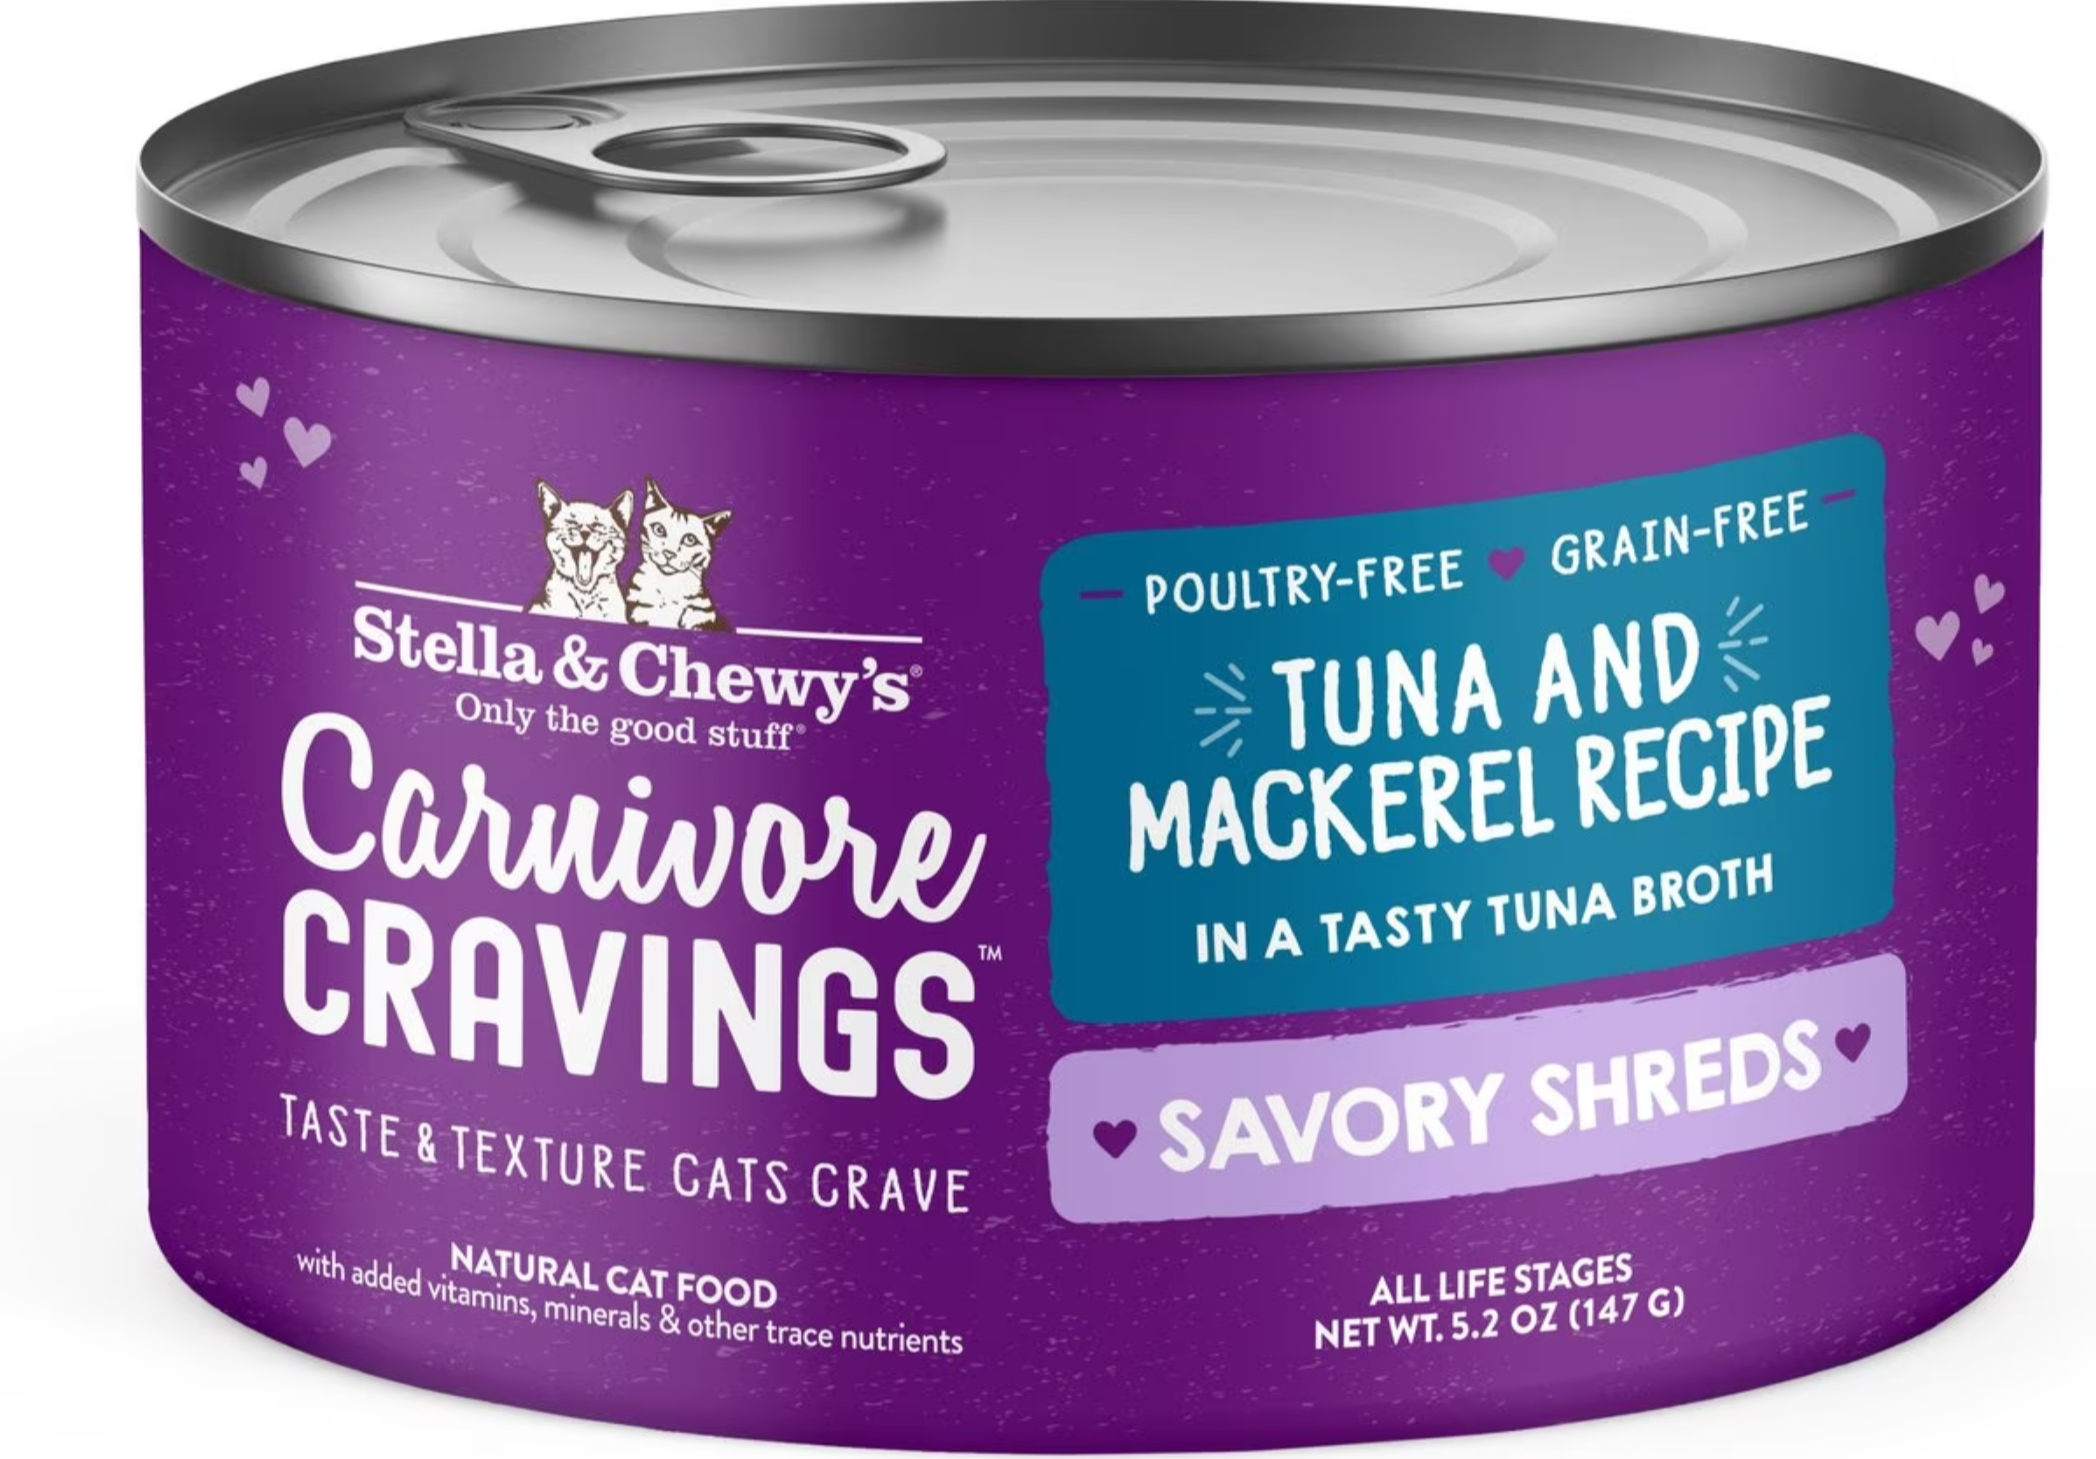 Stella & Chewy's Carnivore Cravings Savory Shreds Tuna & Mackerel Recipe - 5.2oz Can